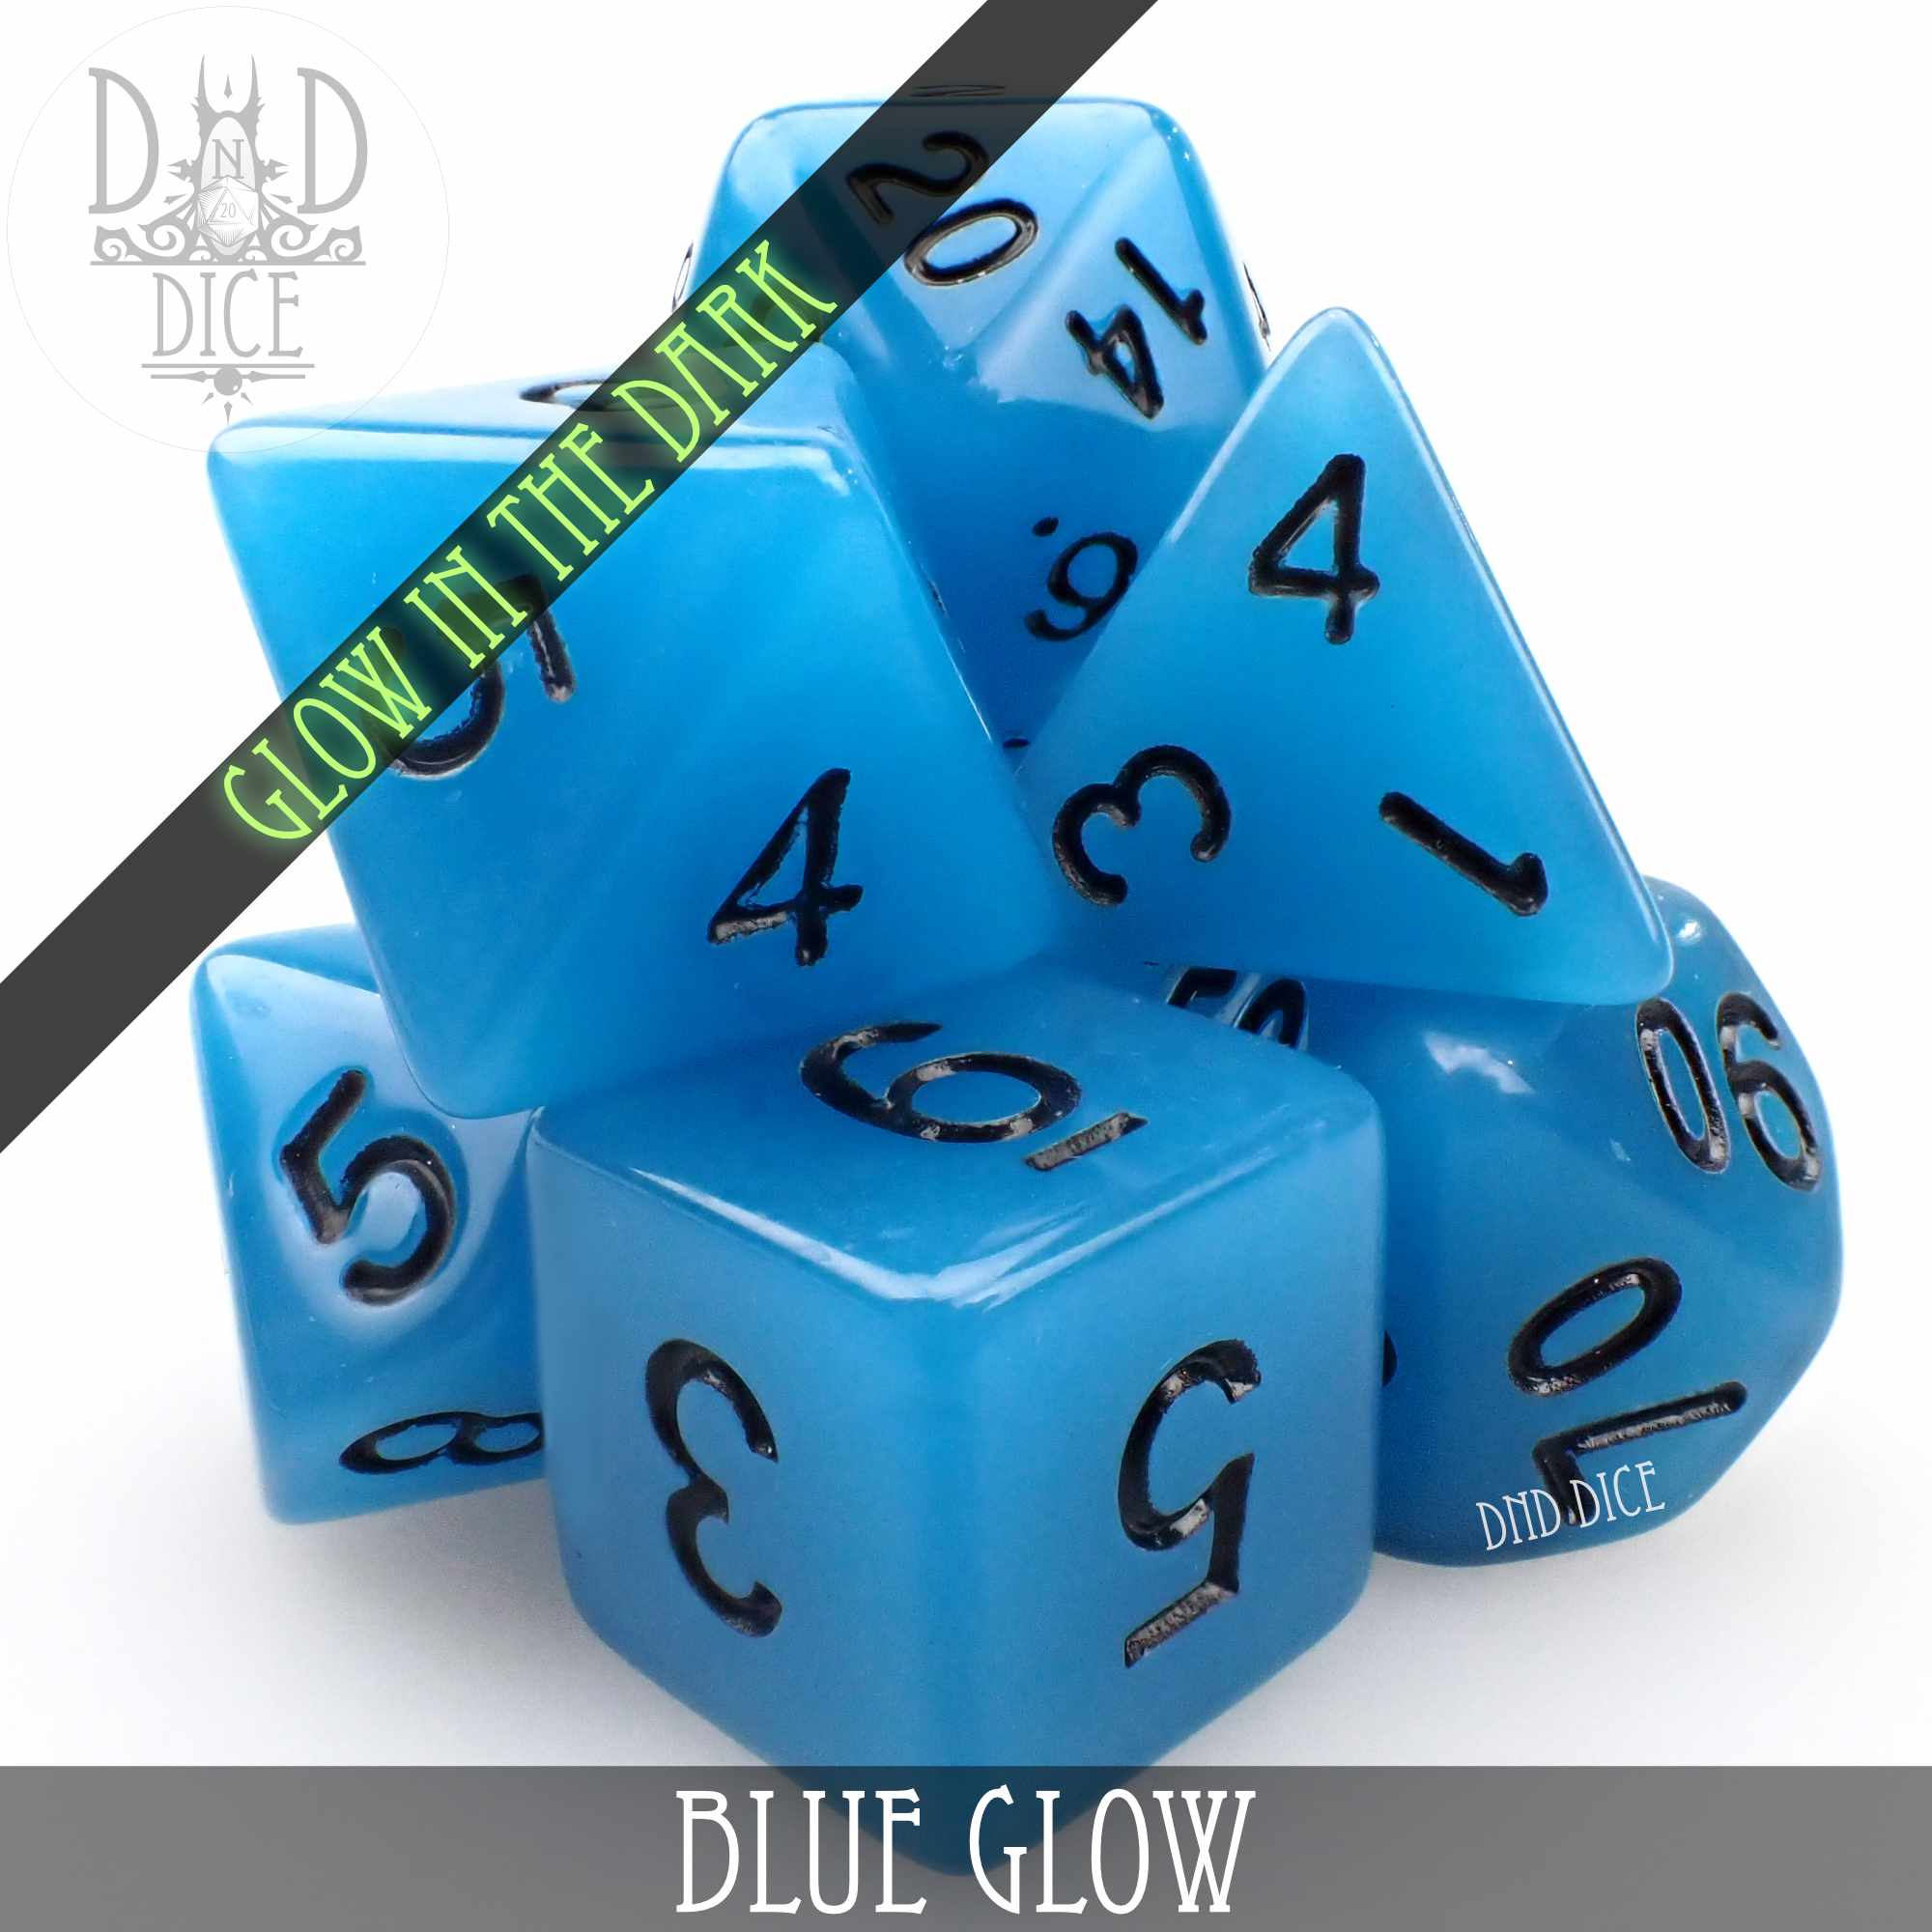 Blue Glow in the Dark Dice Set